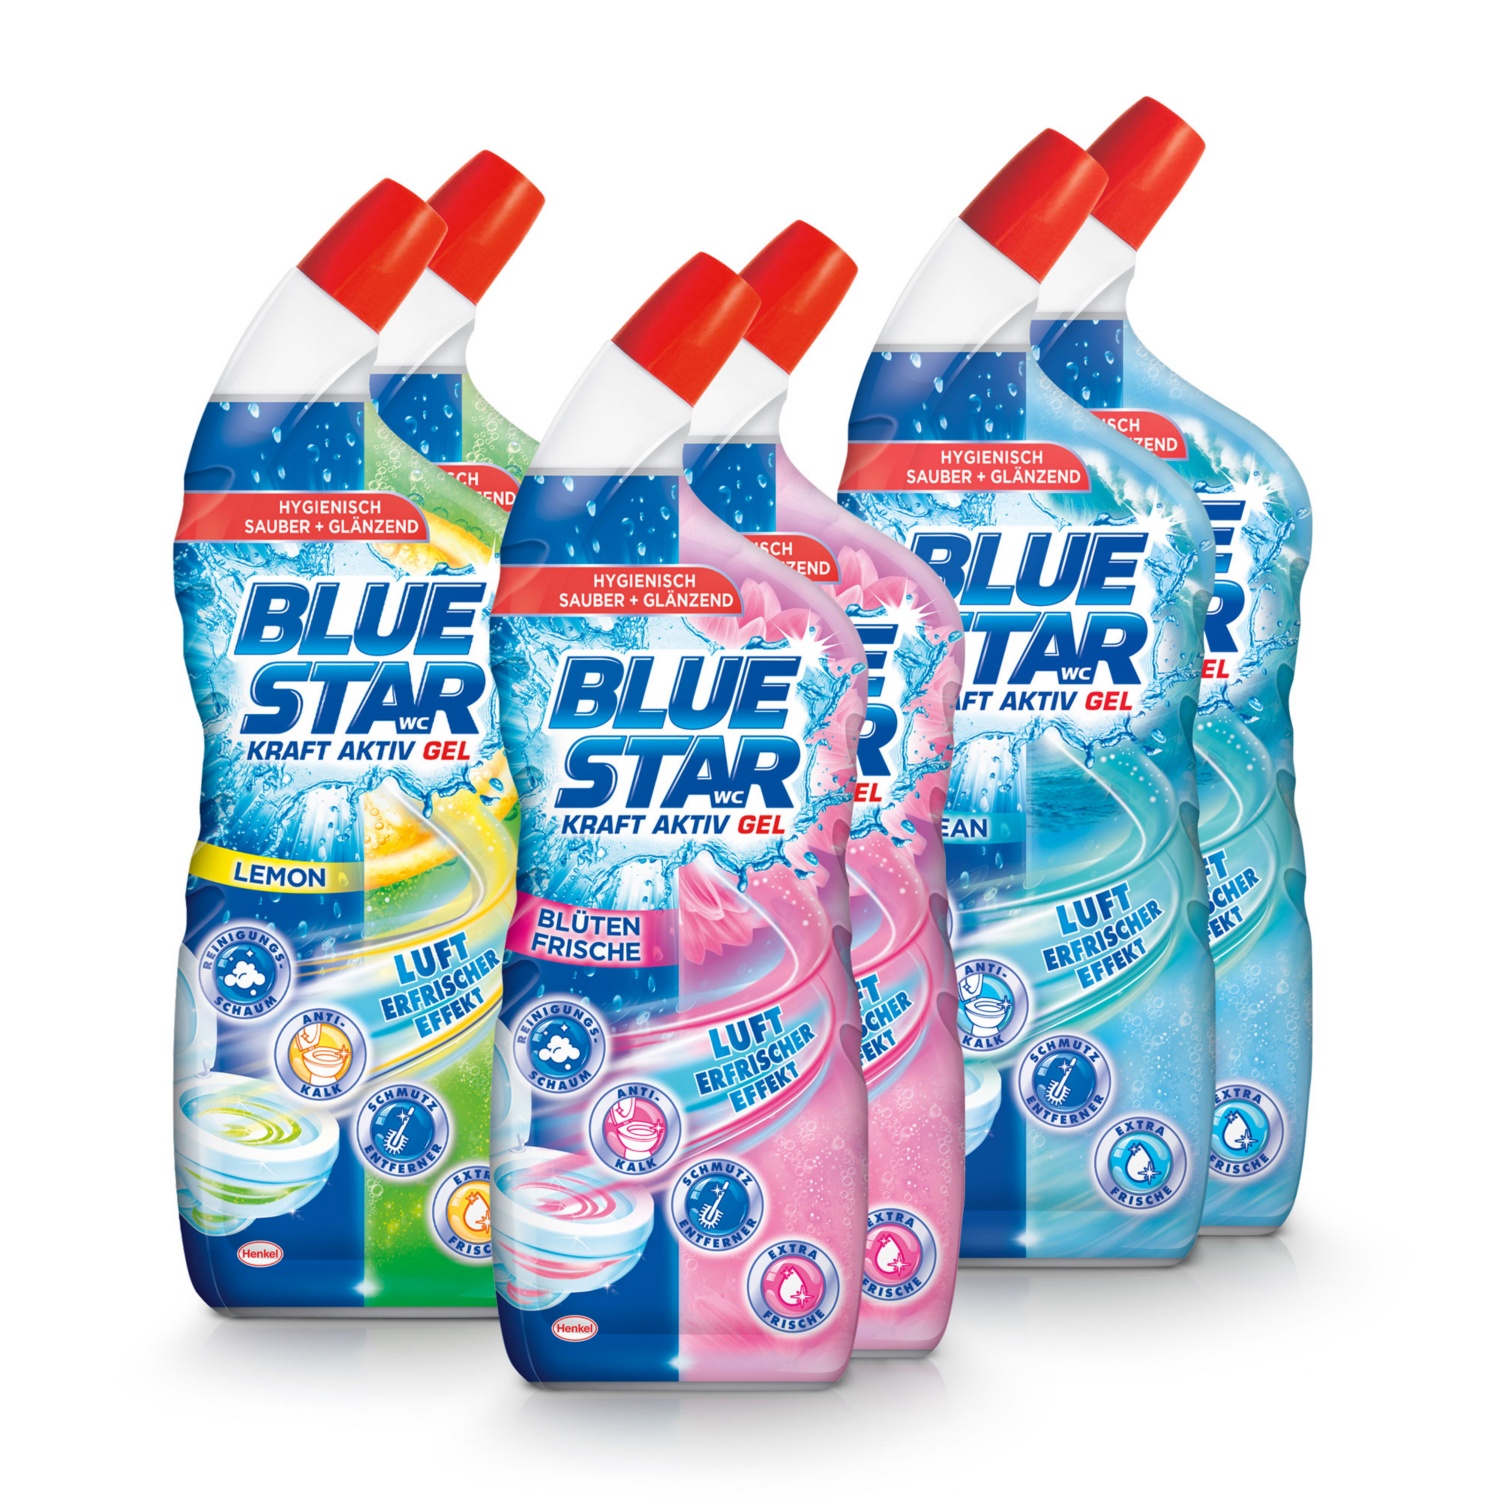 BLUE STAR Kraft Aktiv Gel, Doppelpkg.